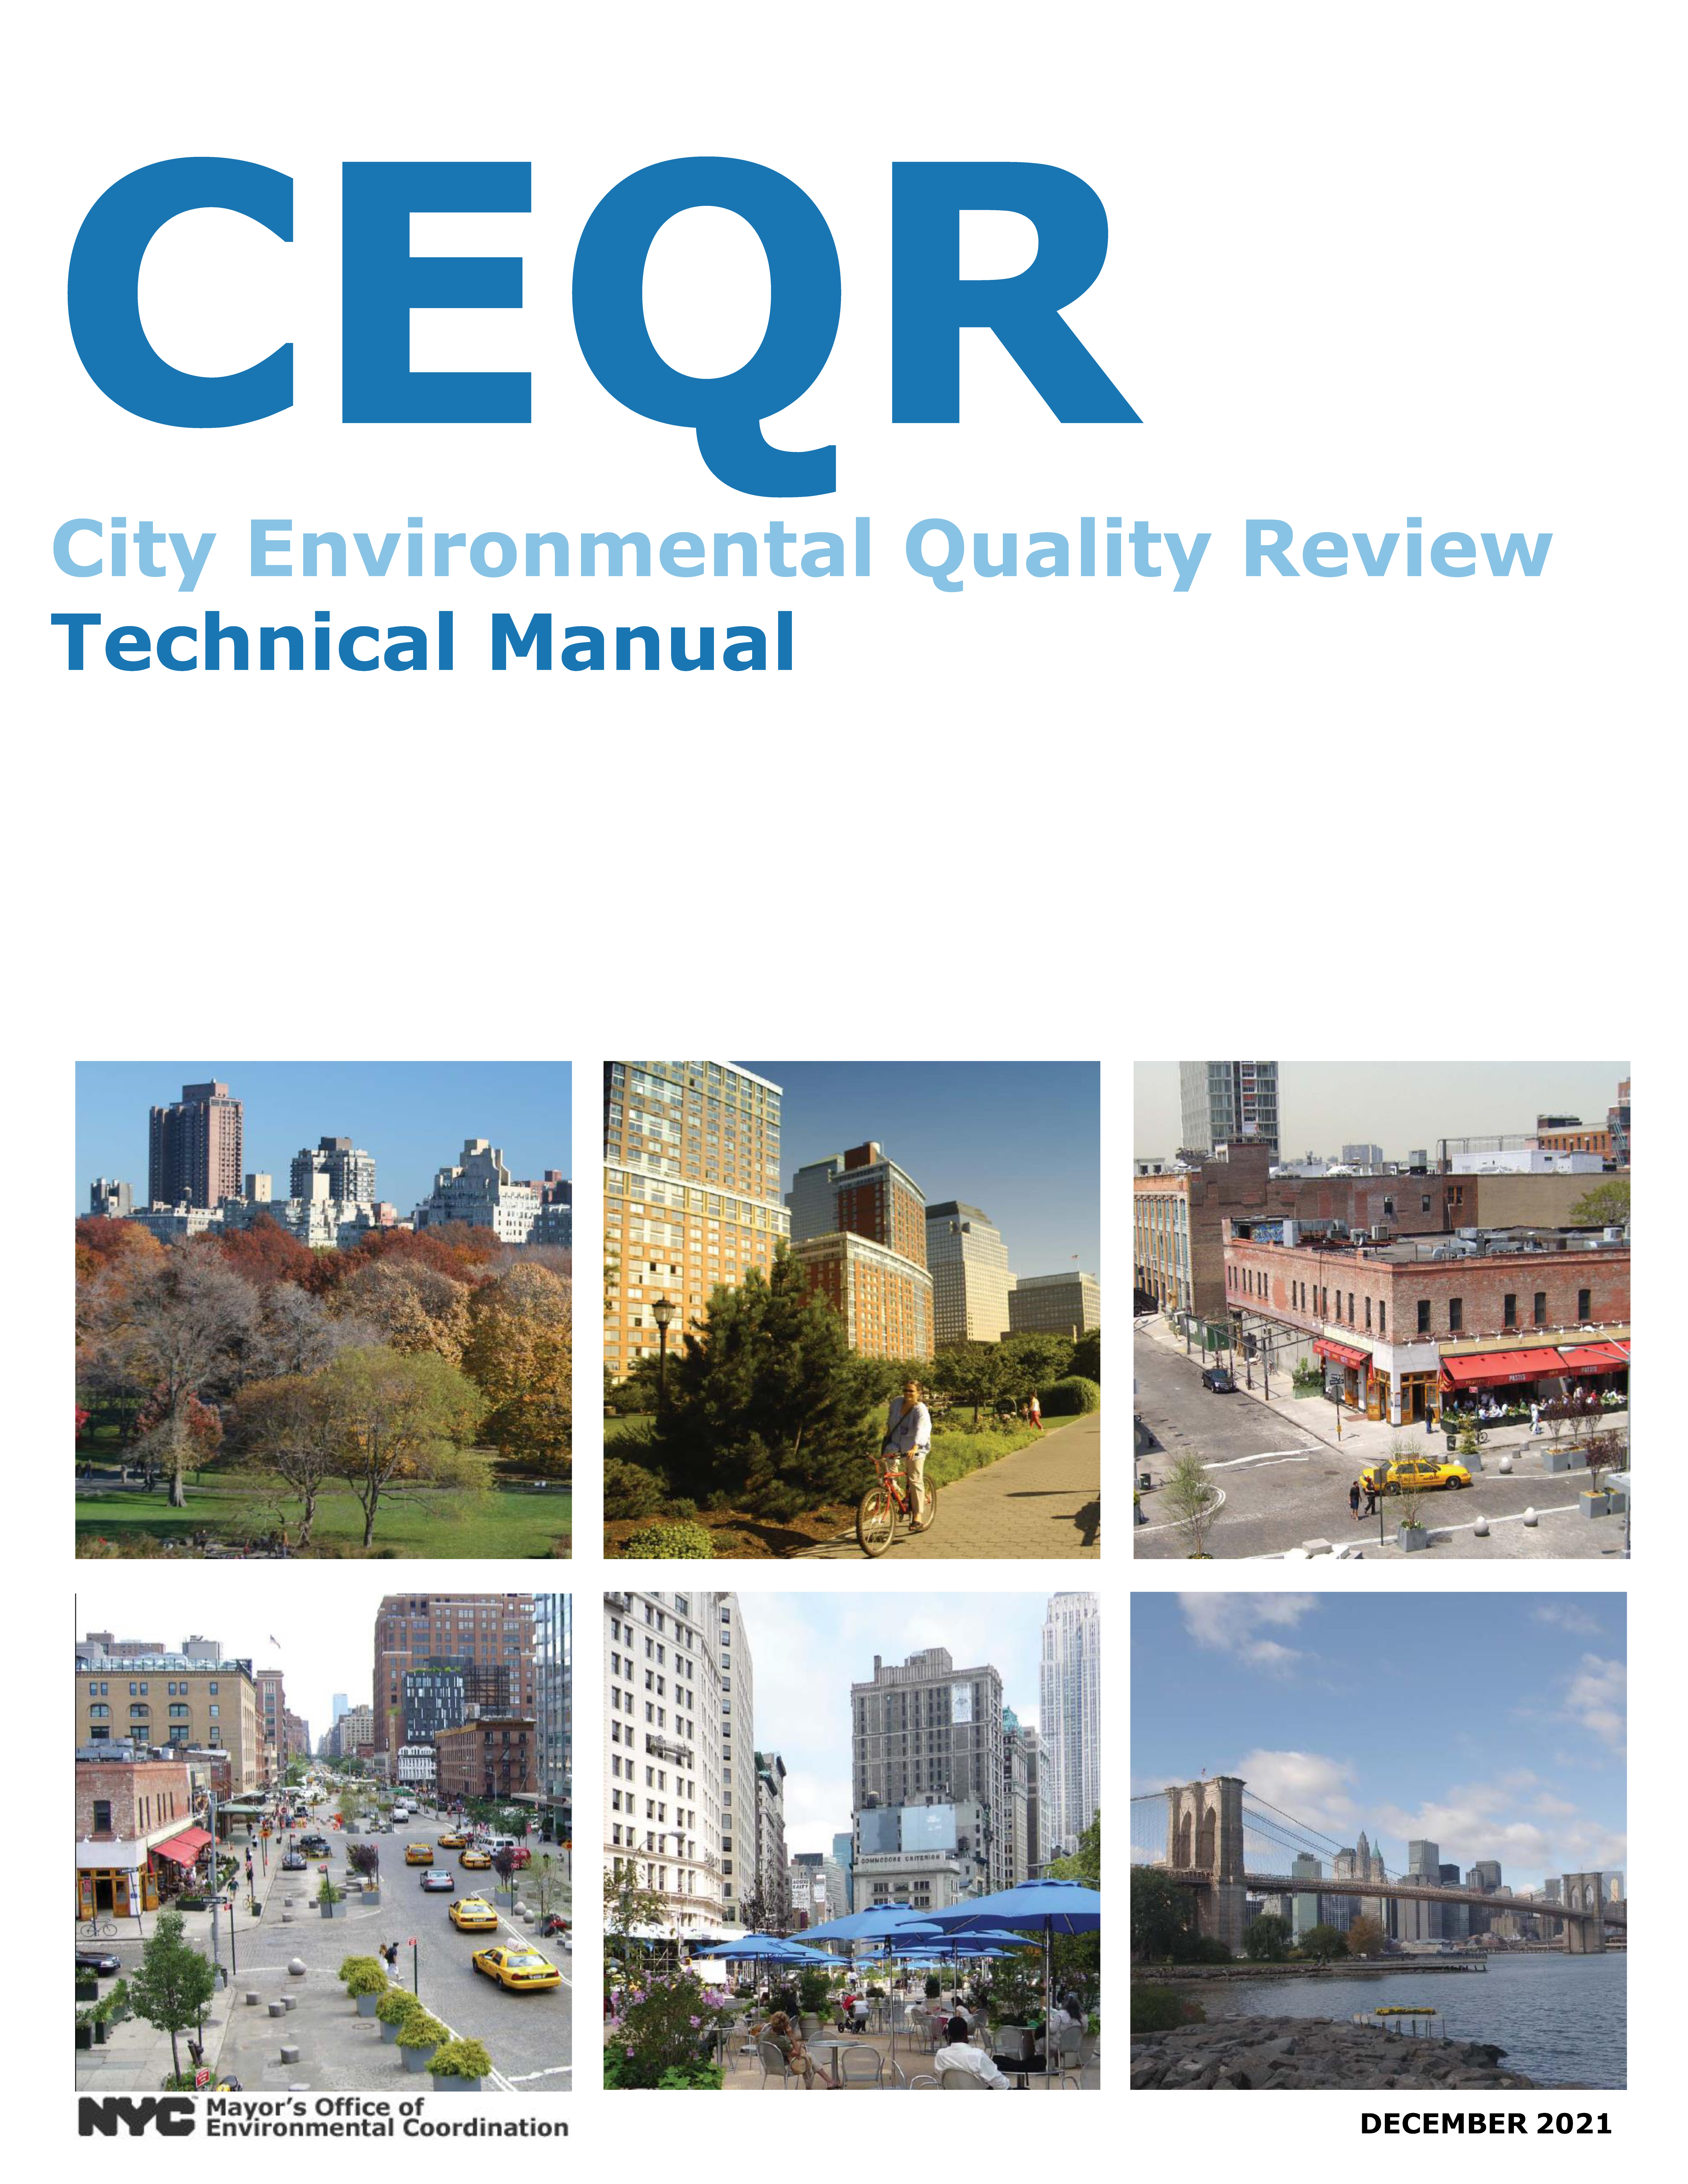 CEQR Technical Manual. December 2021 Edition.
                                           